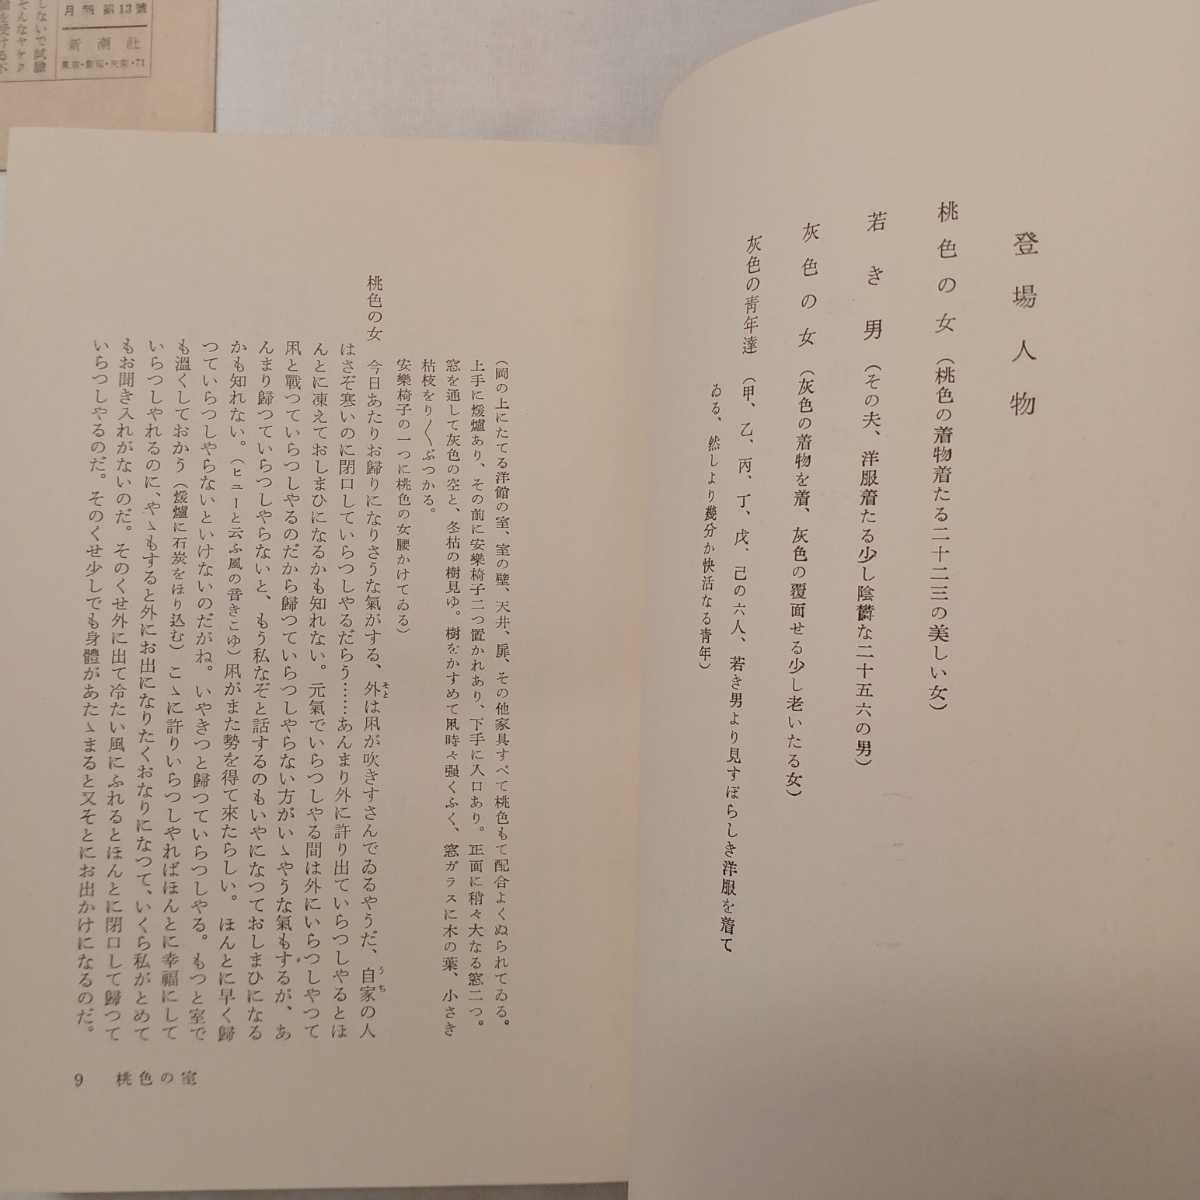 zaa-mb05! Mushakoji Saneatsu полное собрание сочинений ( no. 14 шт ) пьеса 1 1955 год 1 месяц 1 день Mushakoji Saneatsu ( работа ) Shinchosha версия 